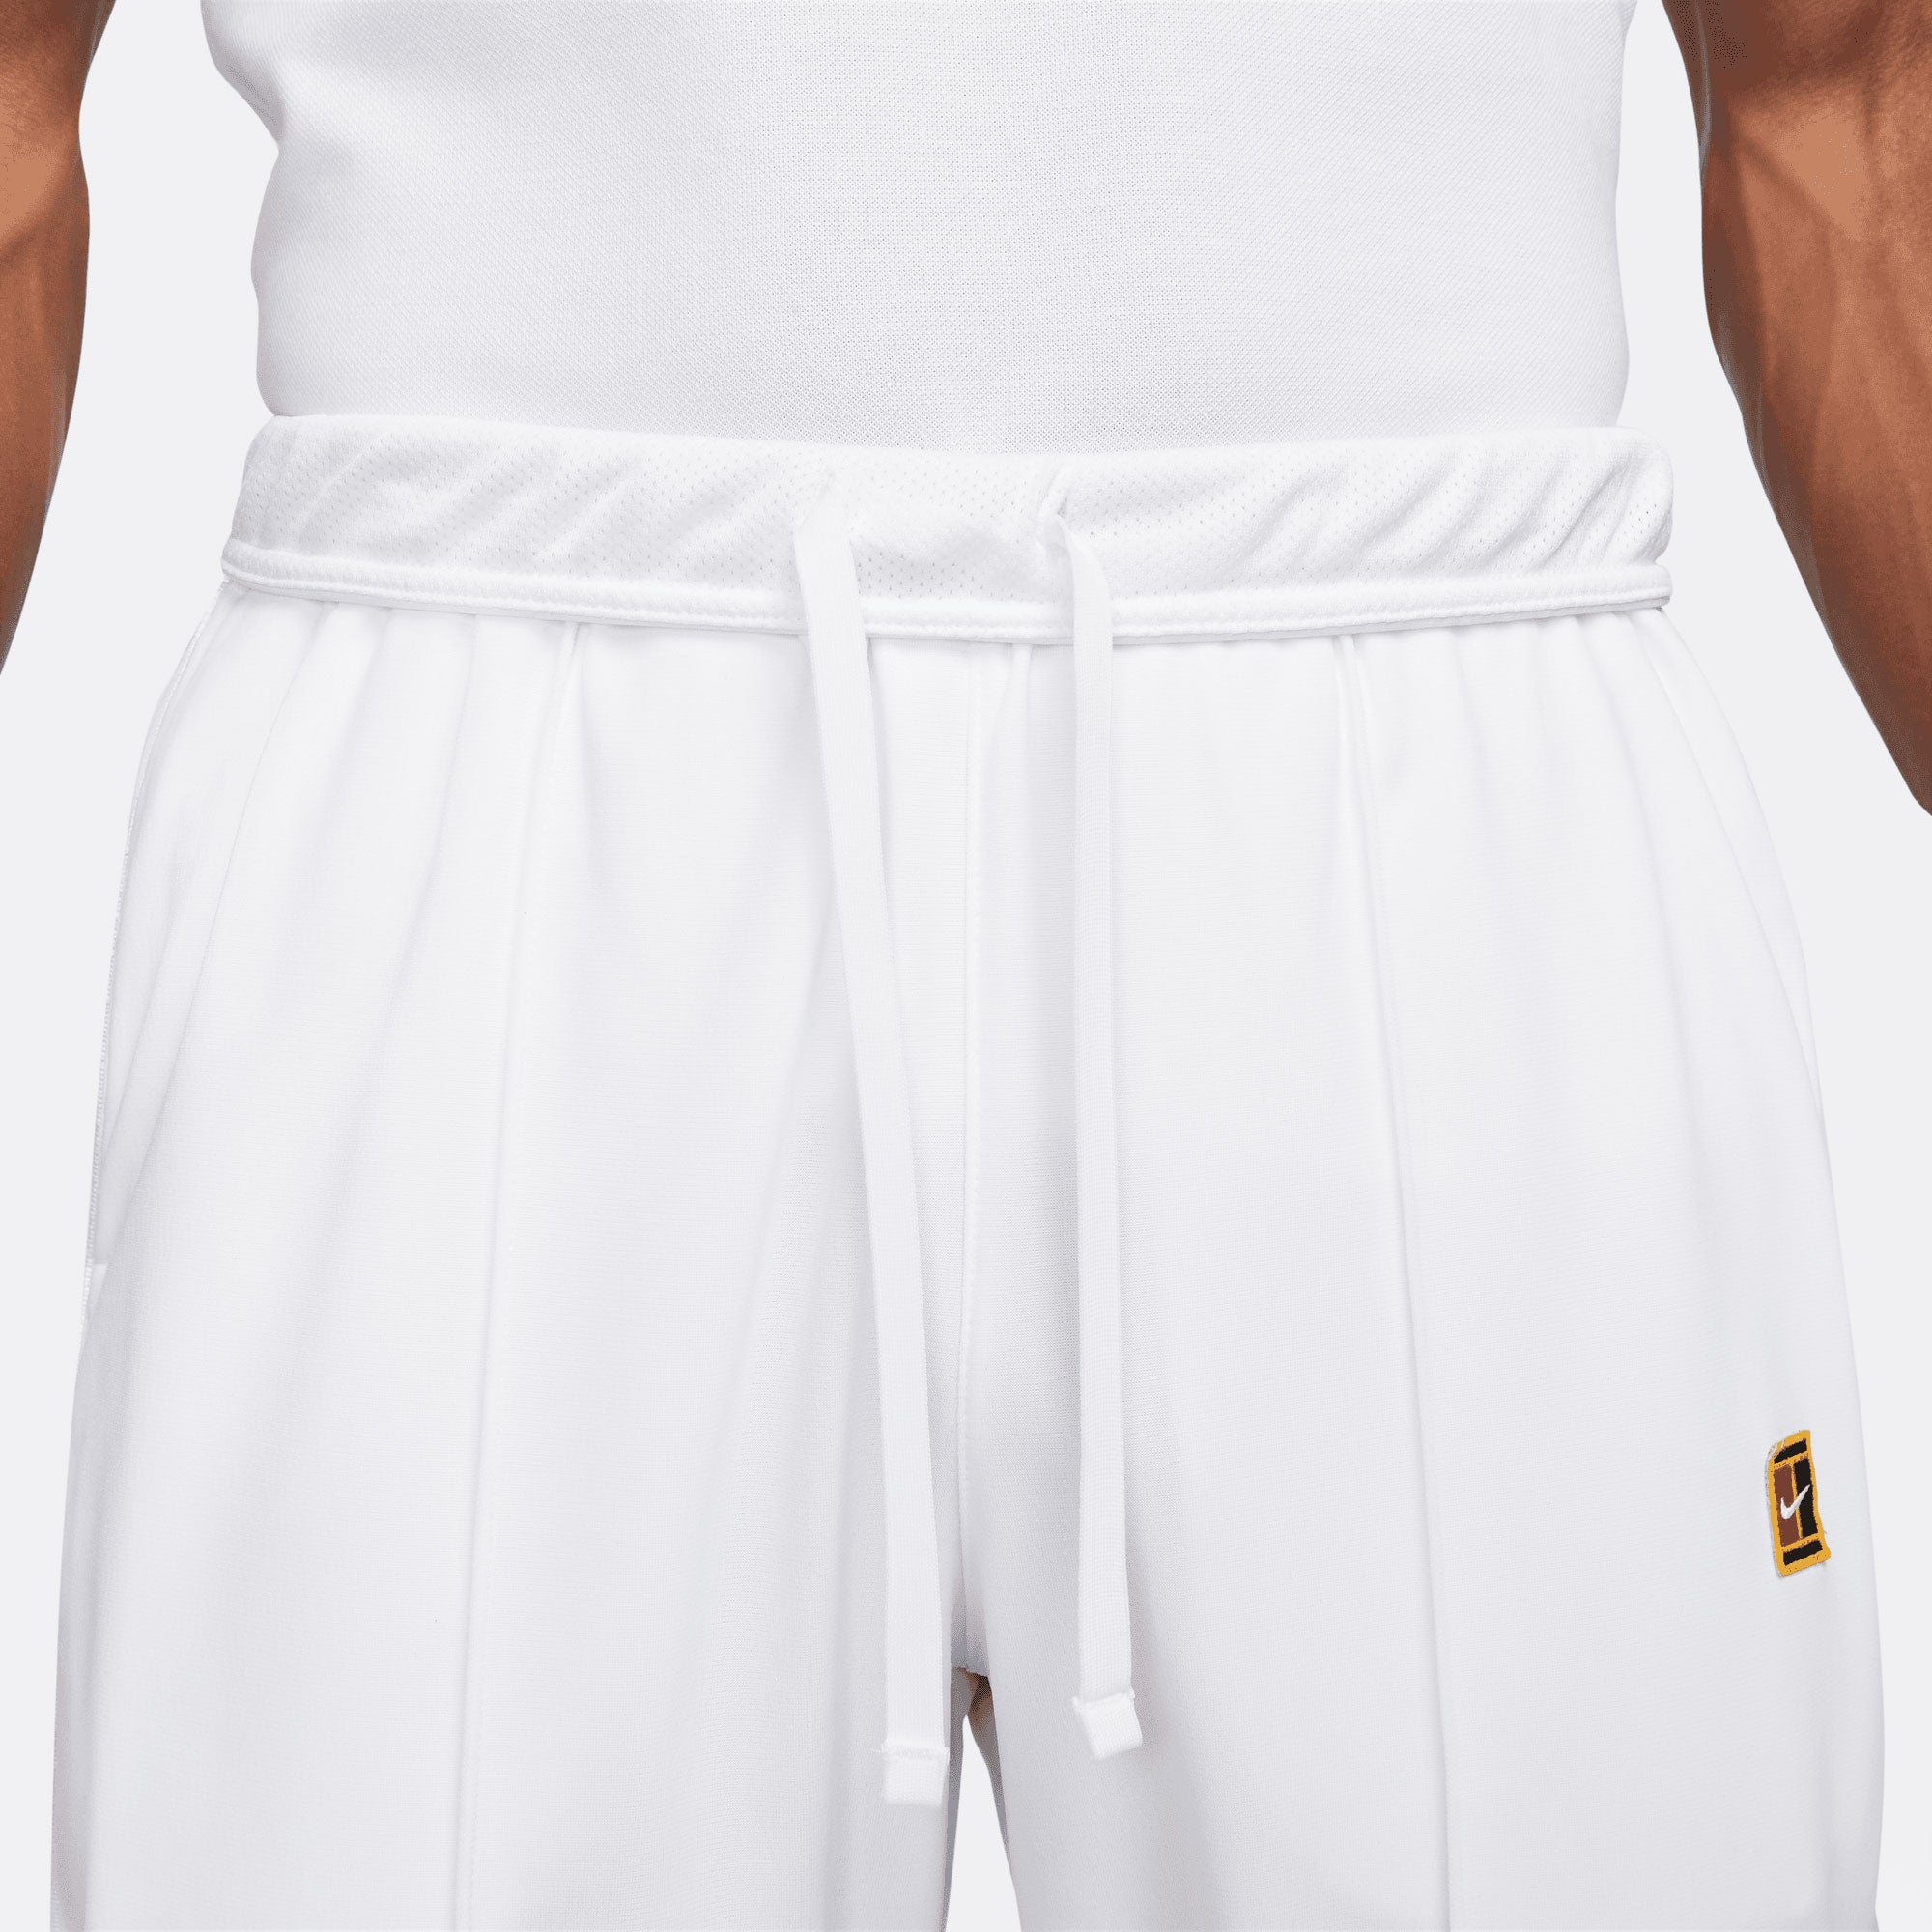 NikeCourt Heritage Men's Tennis Pants White (3)